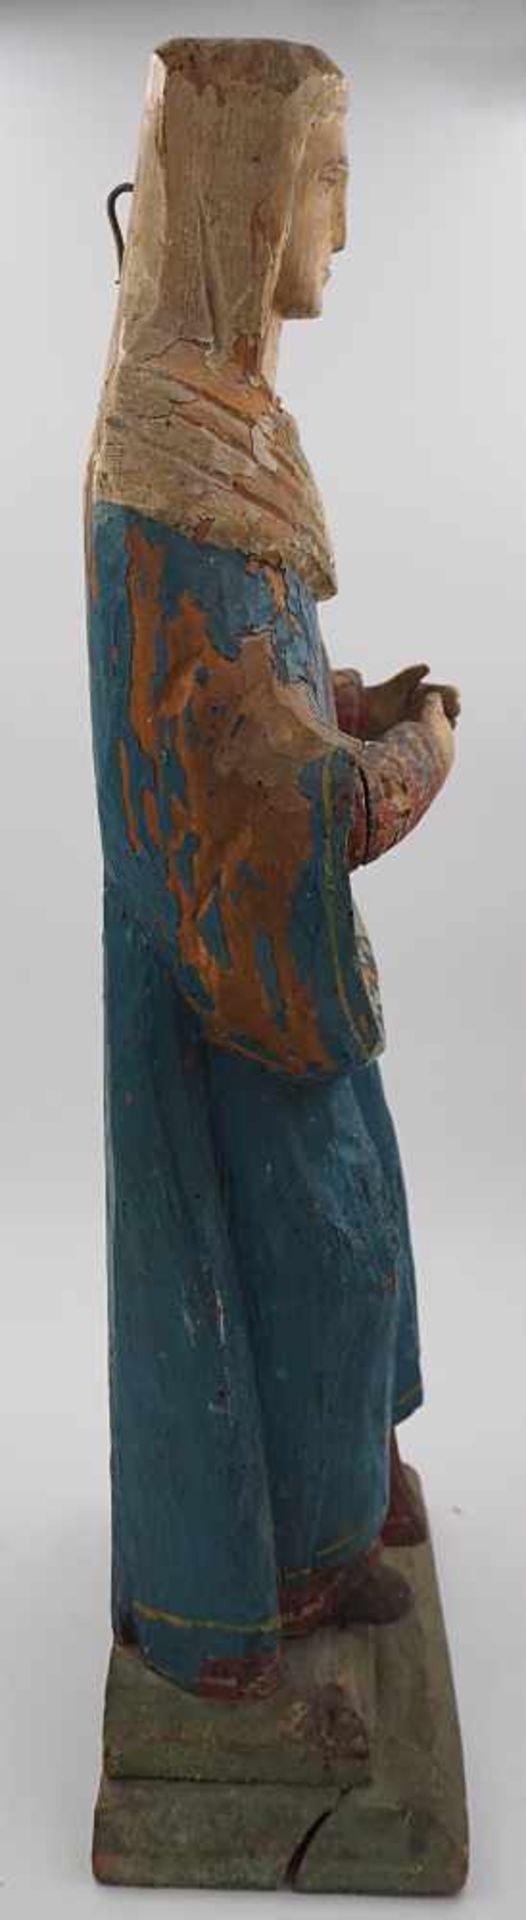 1 Skulptur Holz "Madonna" wohl 19.Jh., polychrome Fassung, - Bild 4 aus 4